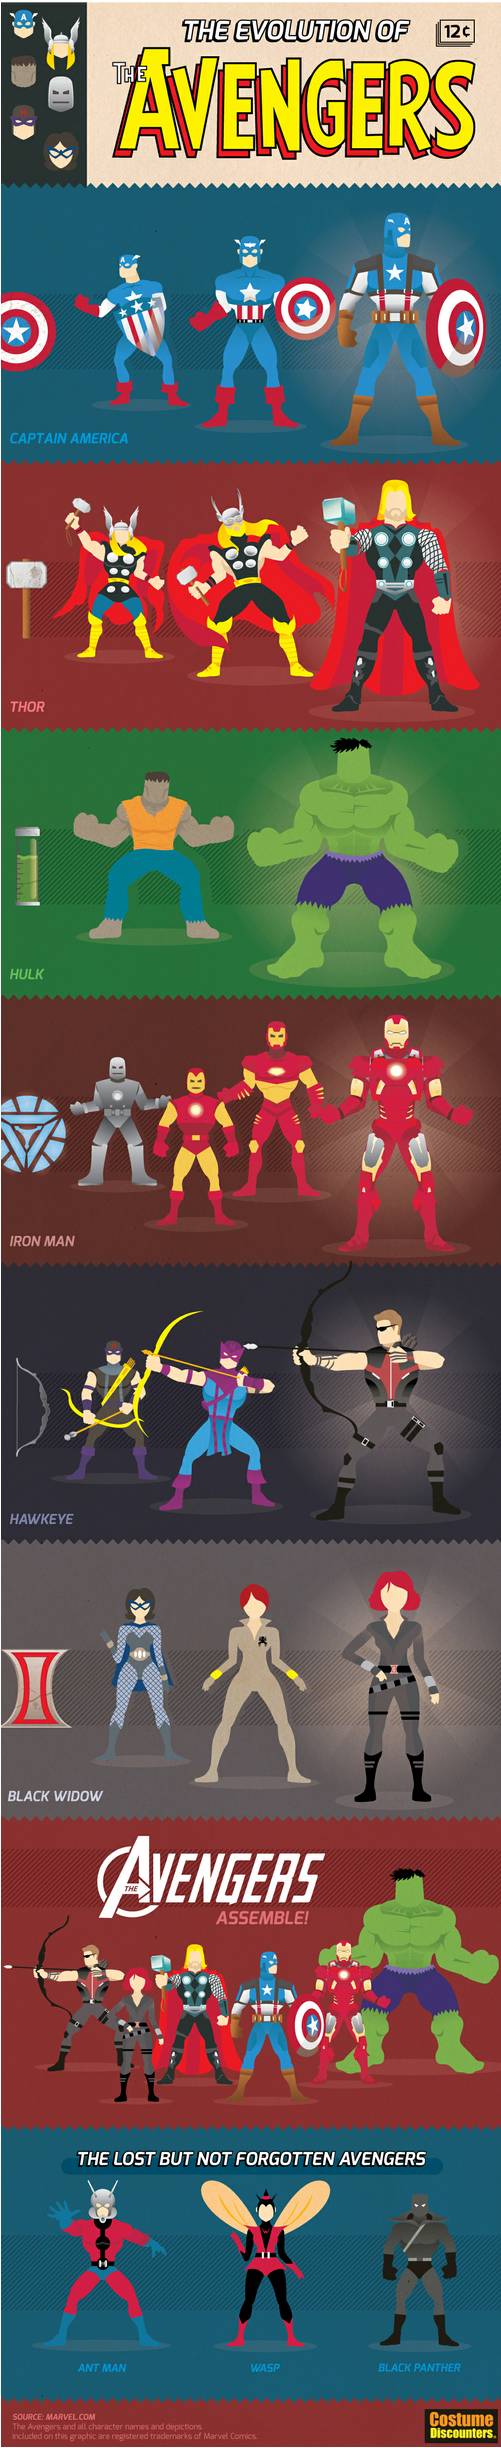 La evolución de The Avengers 1